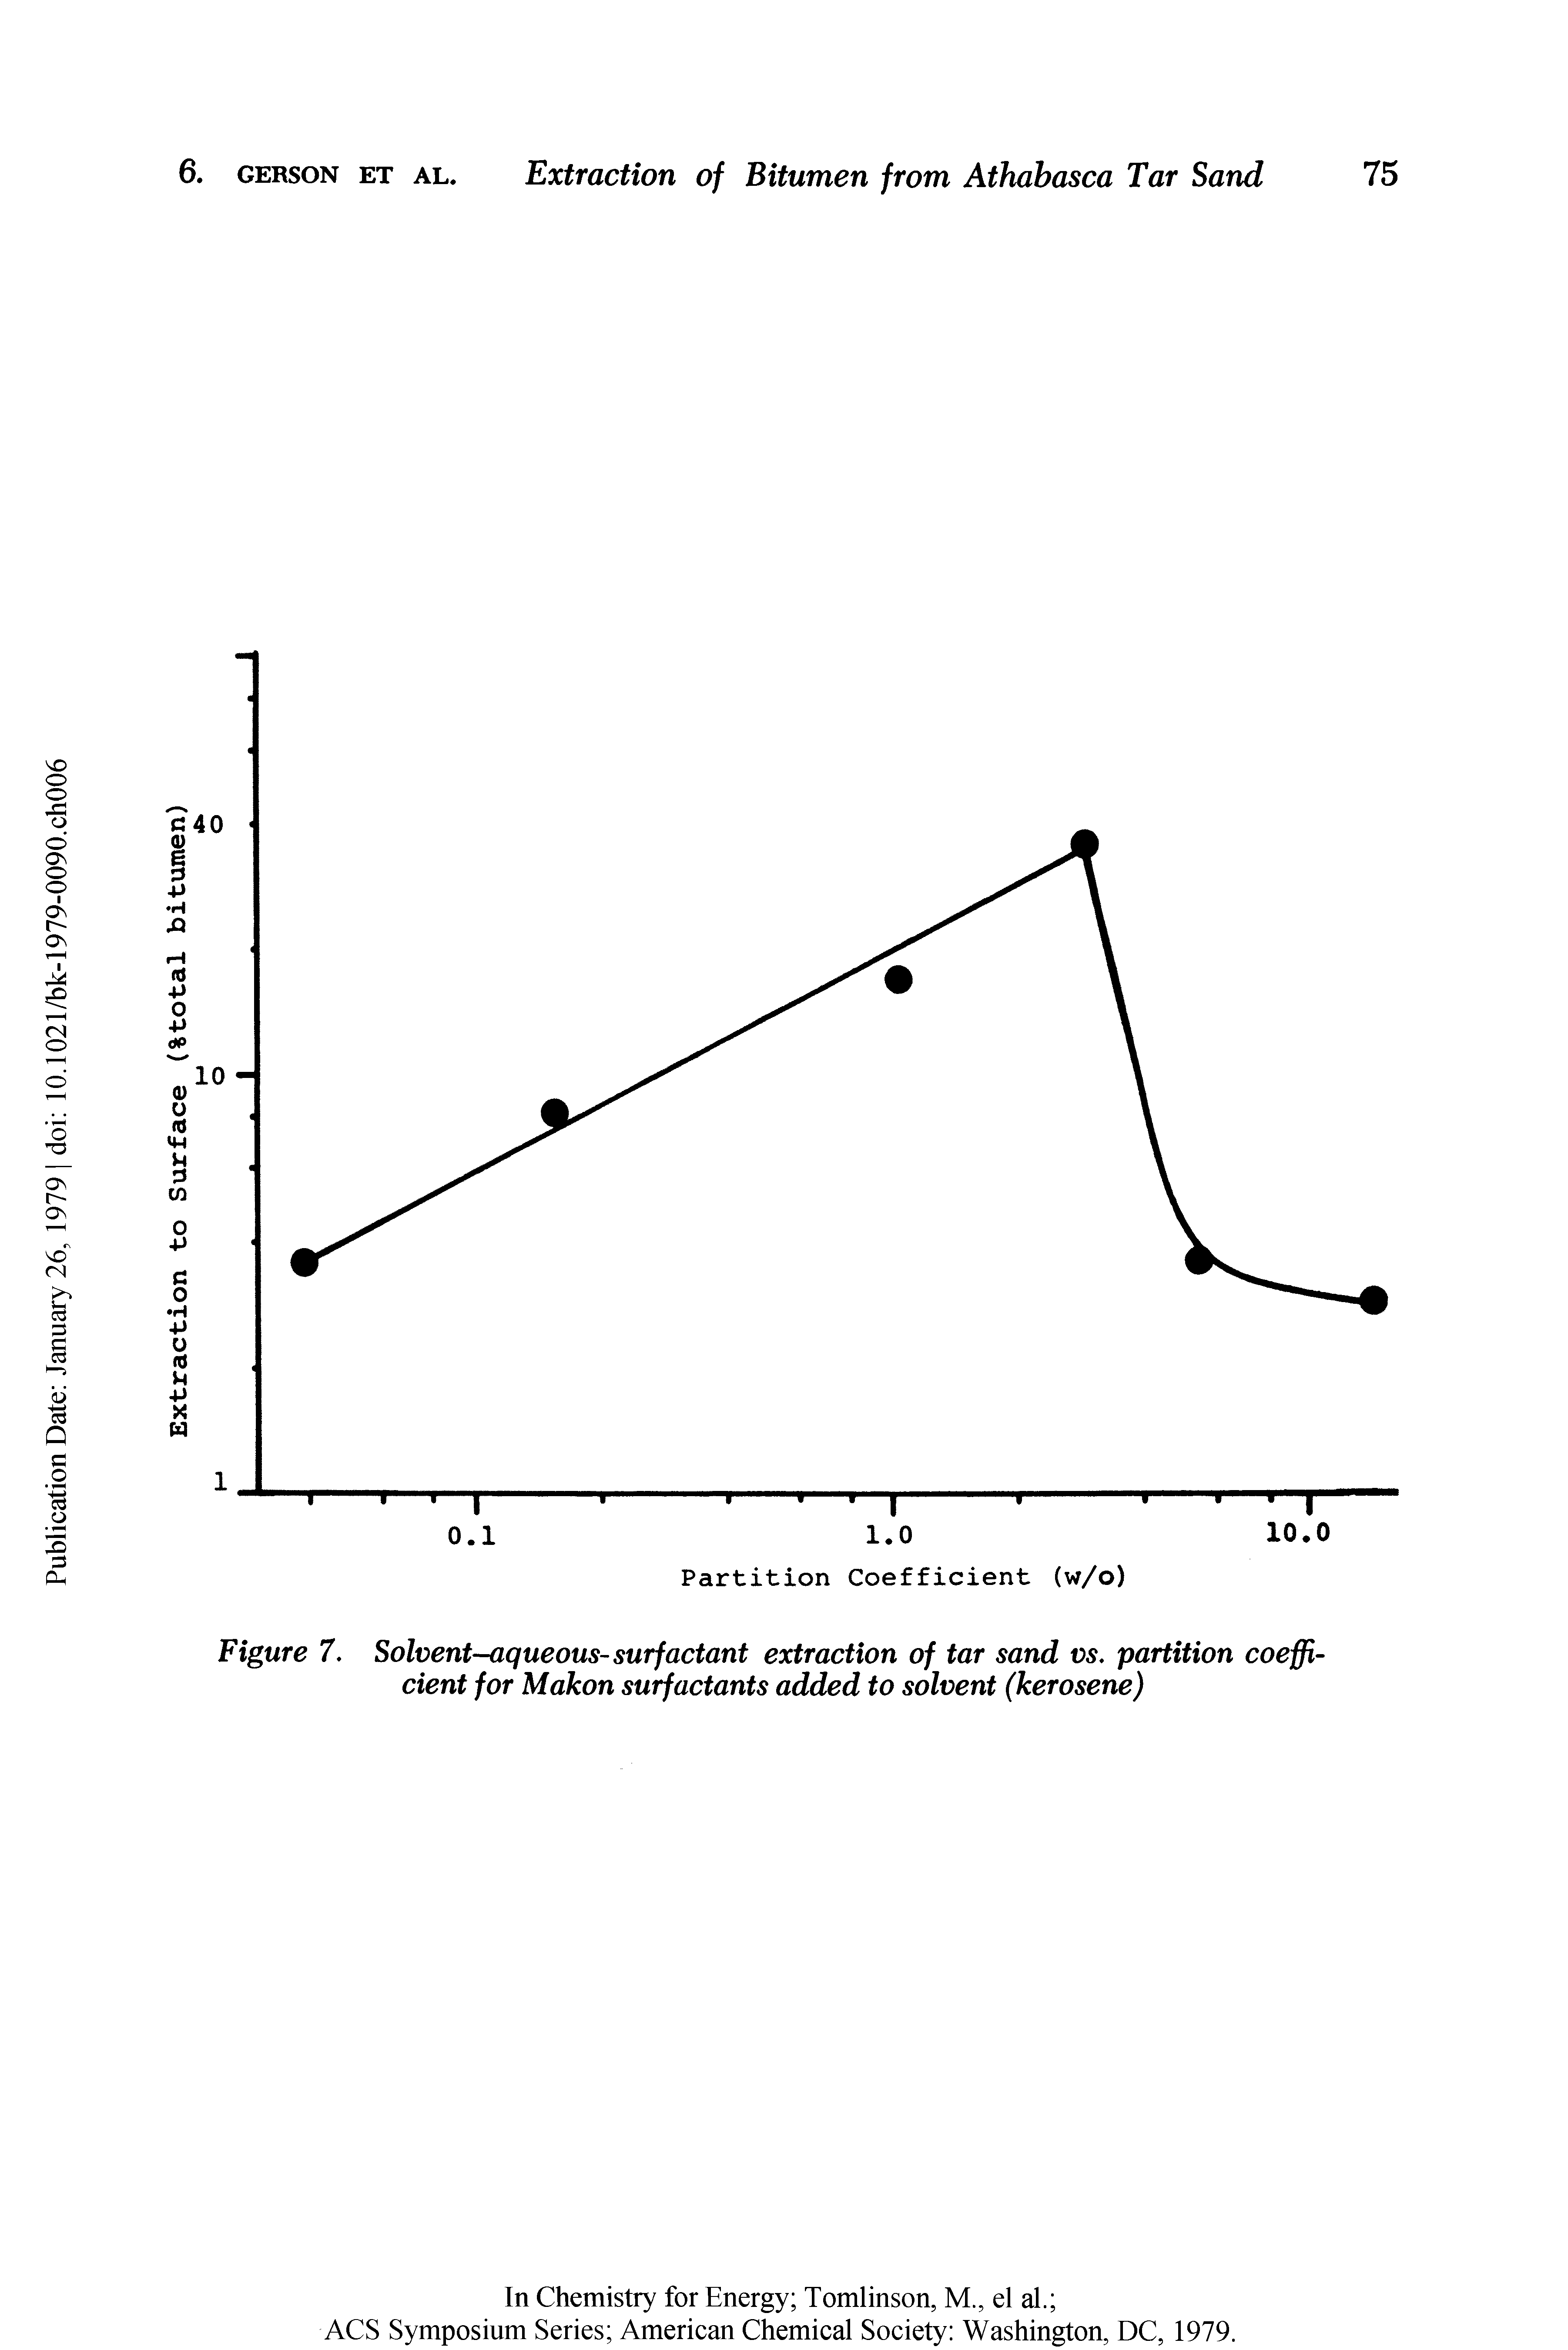 Figure 7. Solvent-aqueous-surfactant extraction of tar sand vs, partition coefficient for Makon surfactants added to solvent (kerosene)...